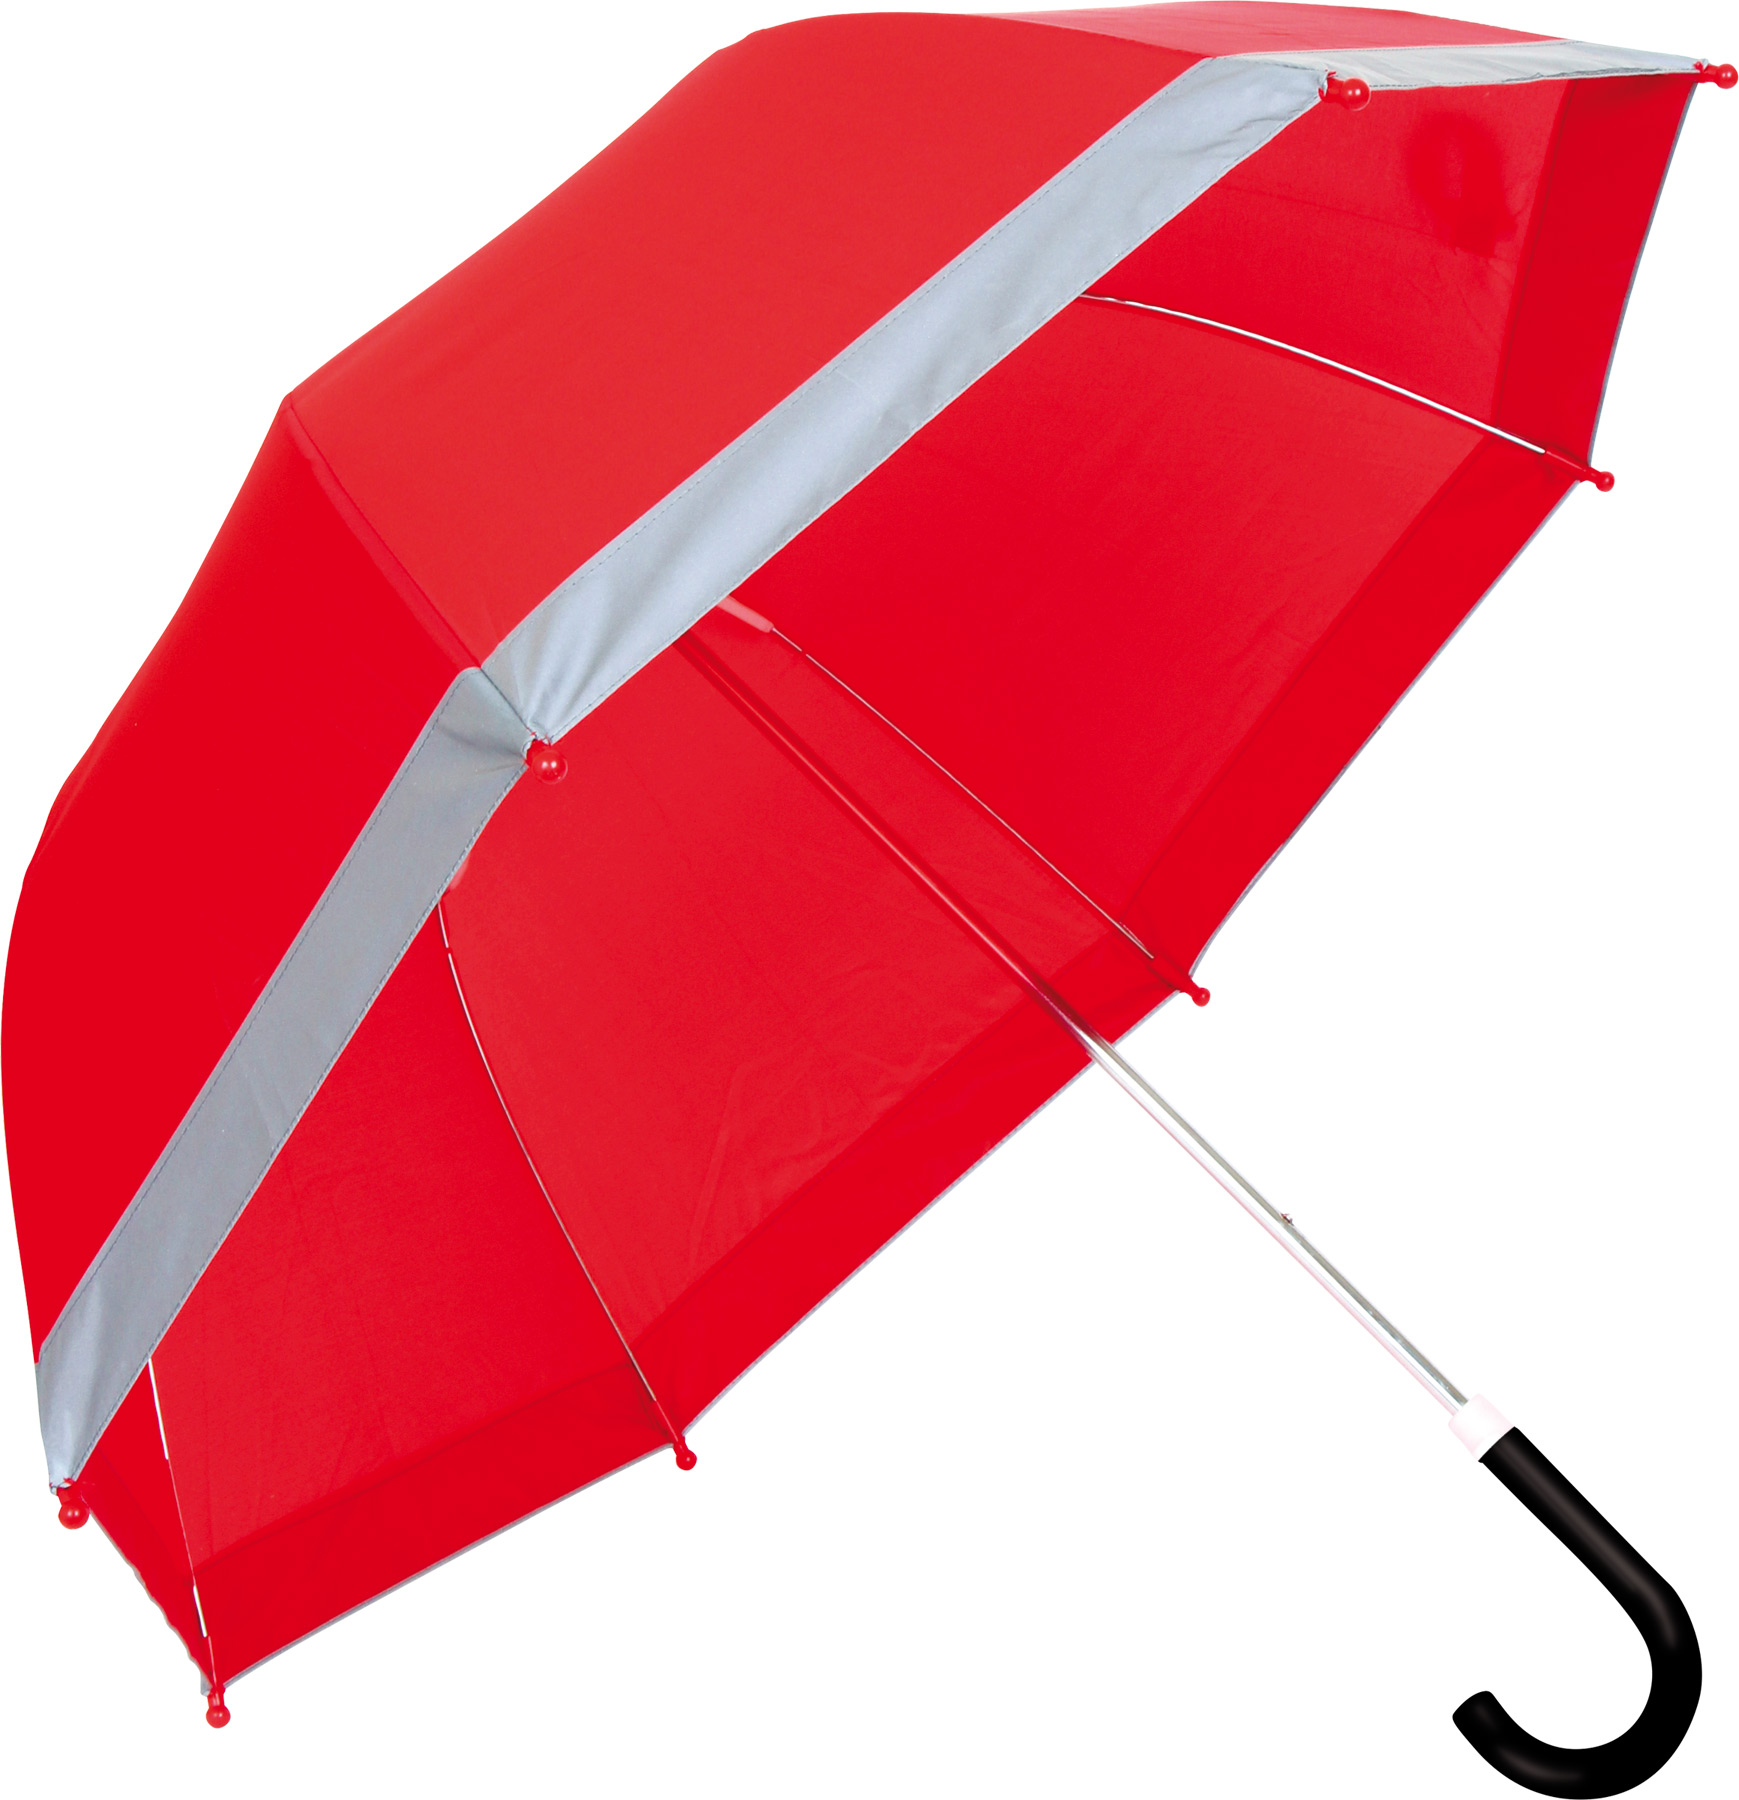 Legler detský dáždnik s reflexným pásikom